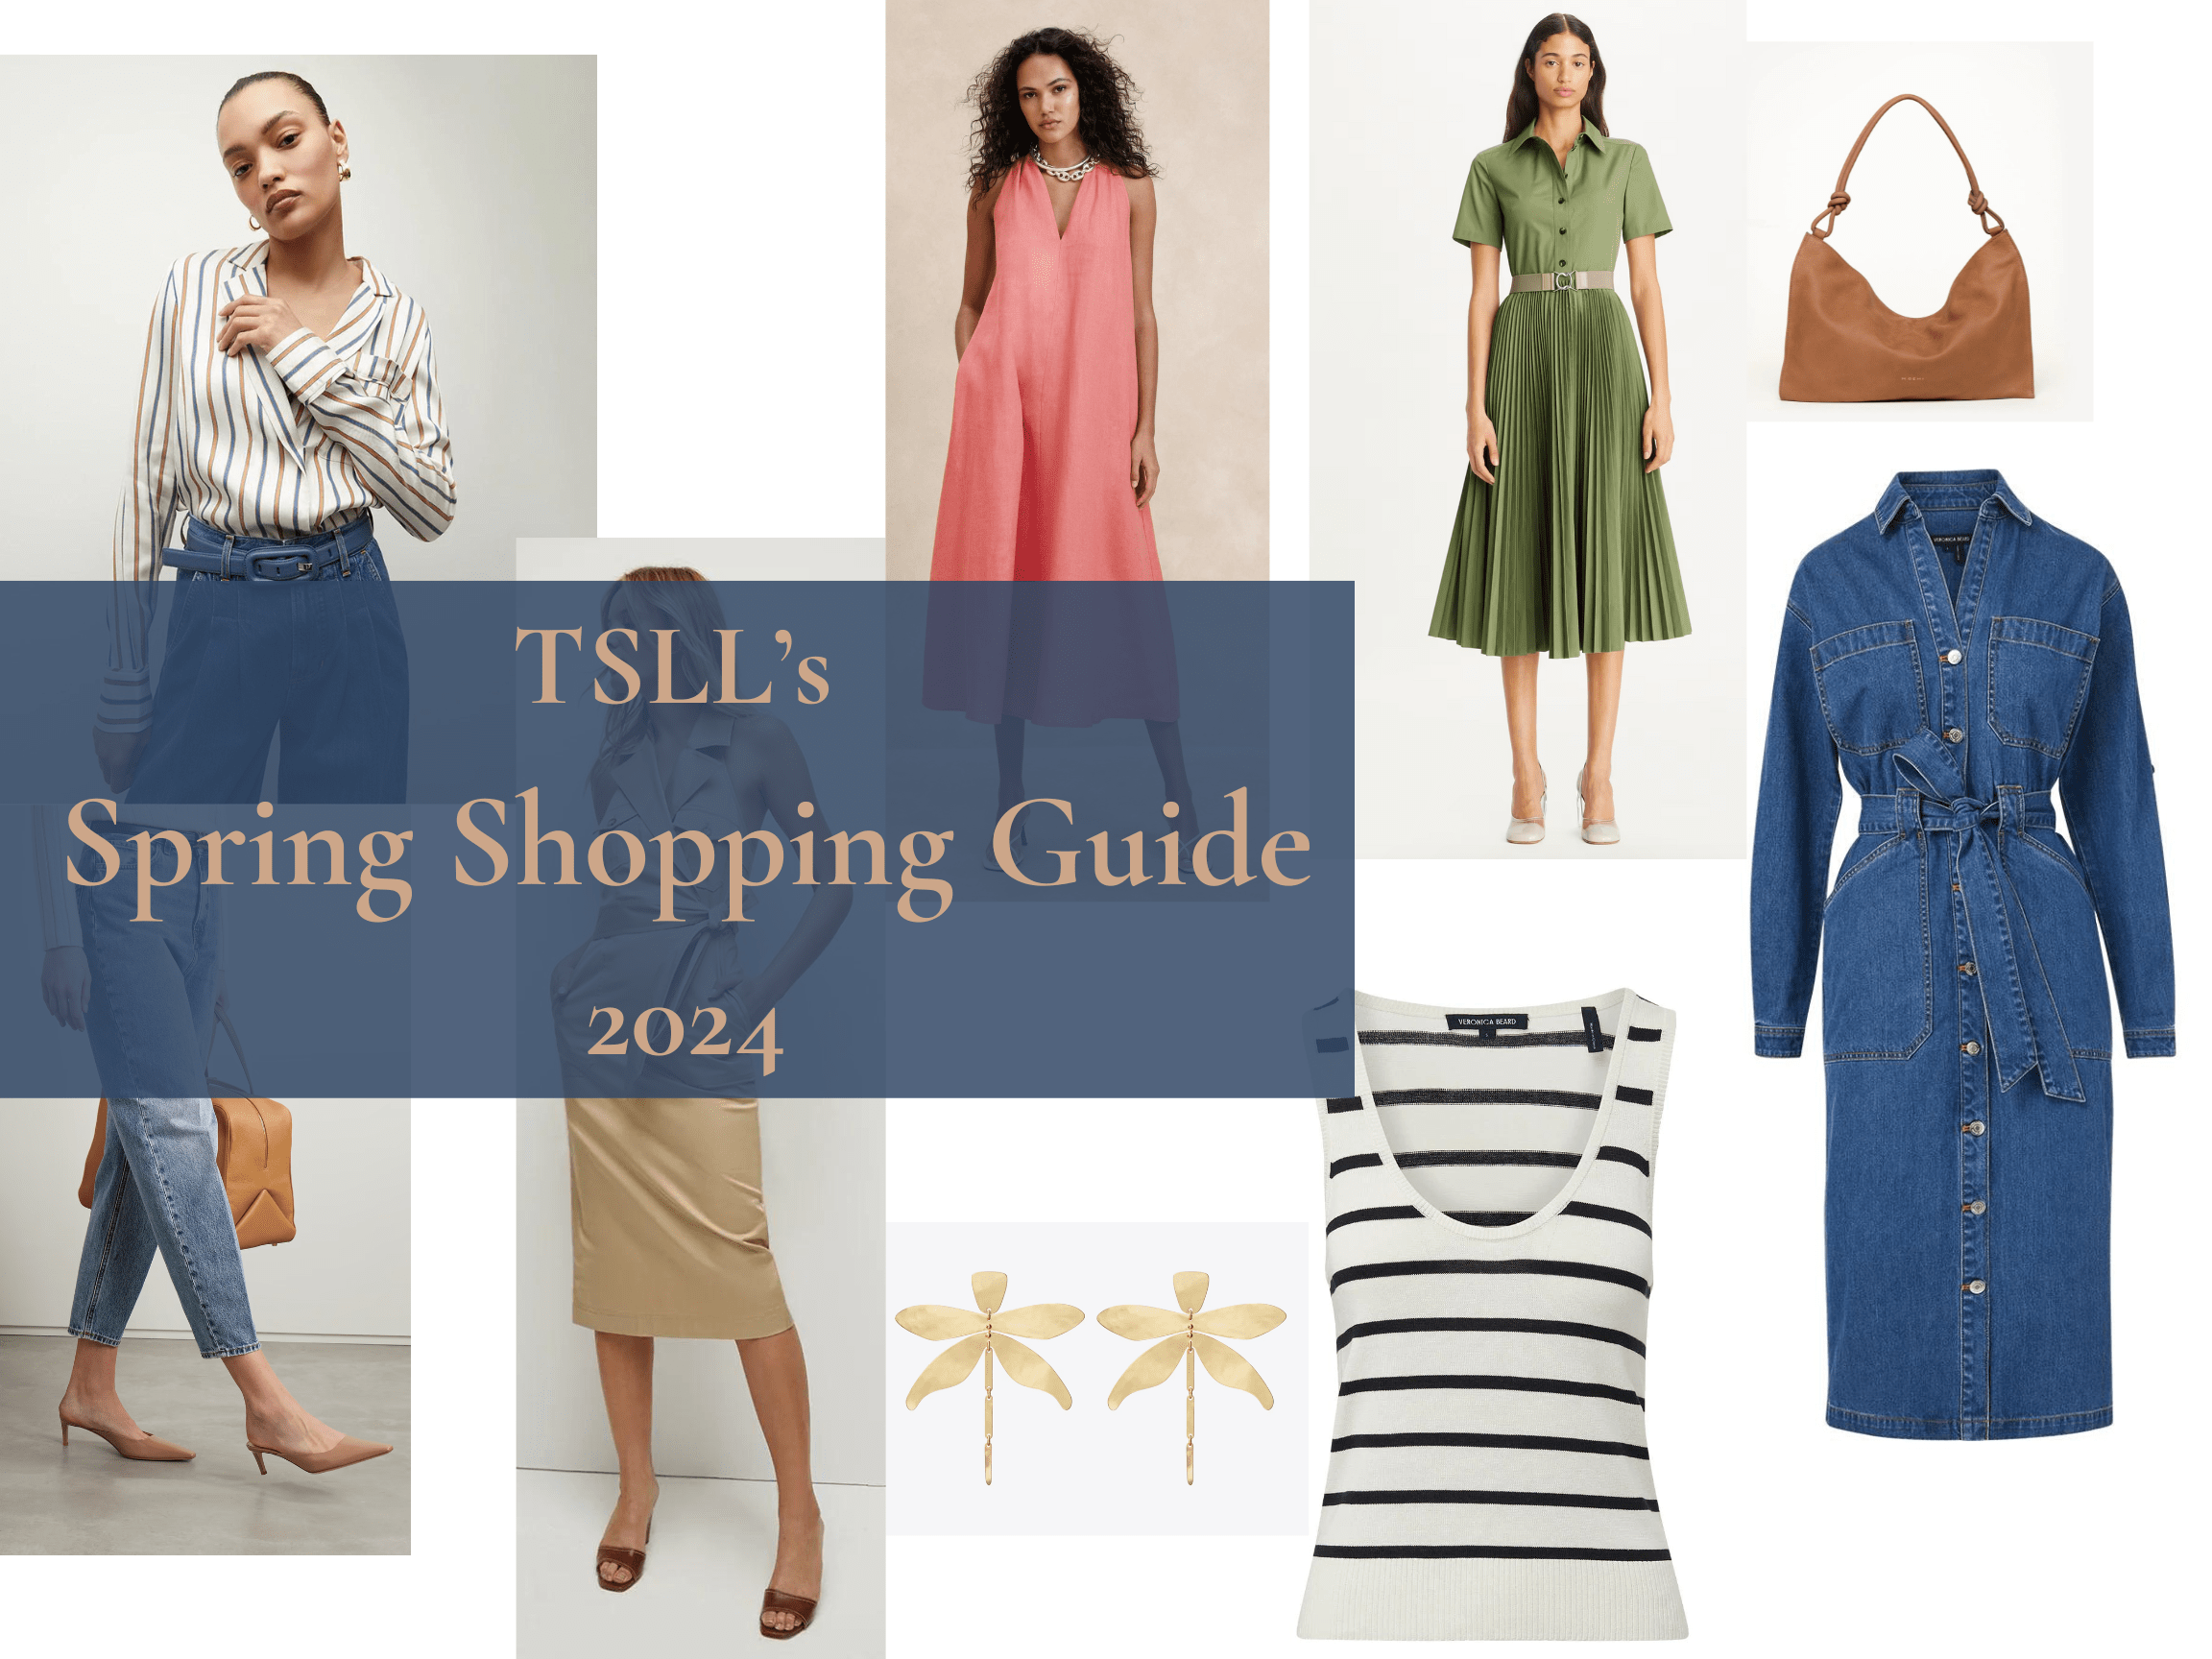 Tsll’s Spring Shopping Guide 2024